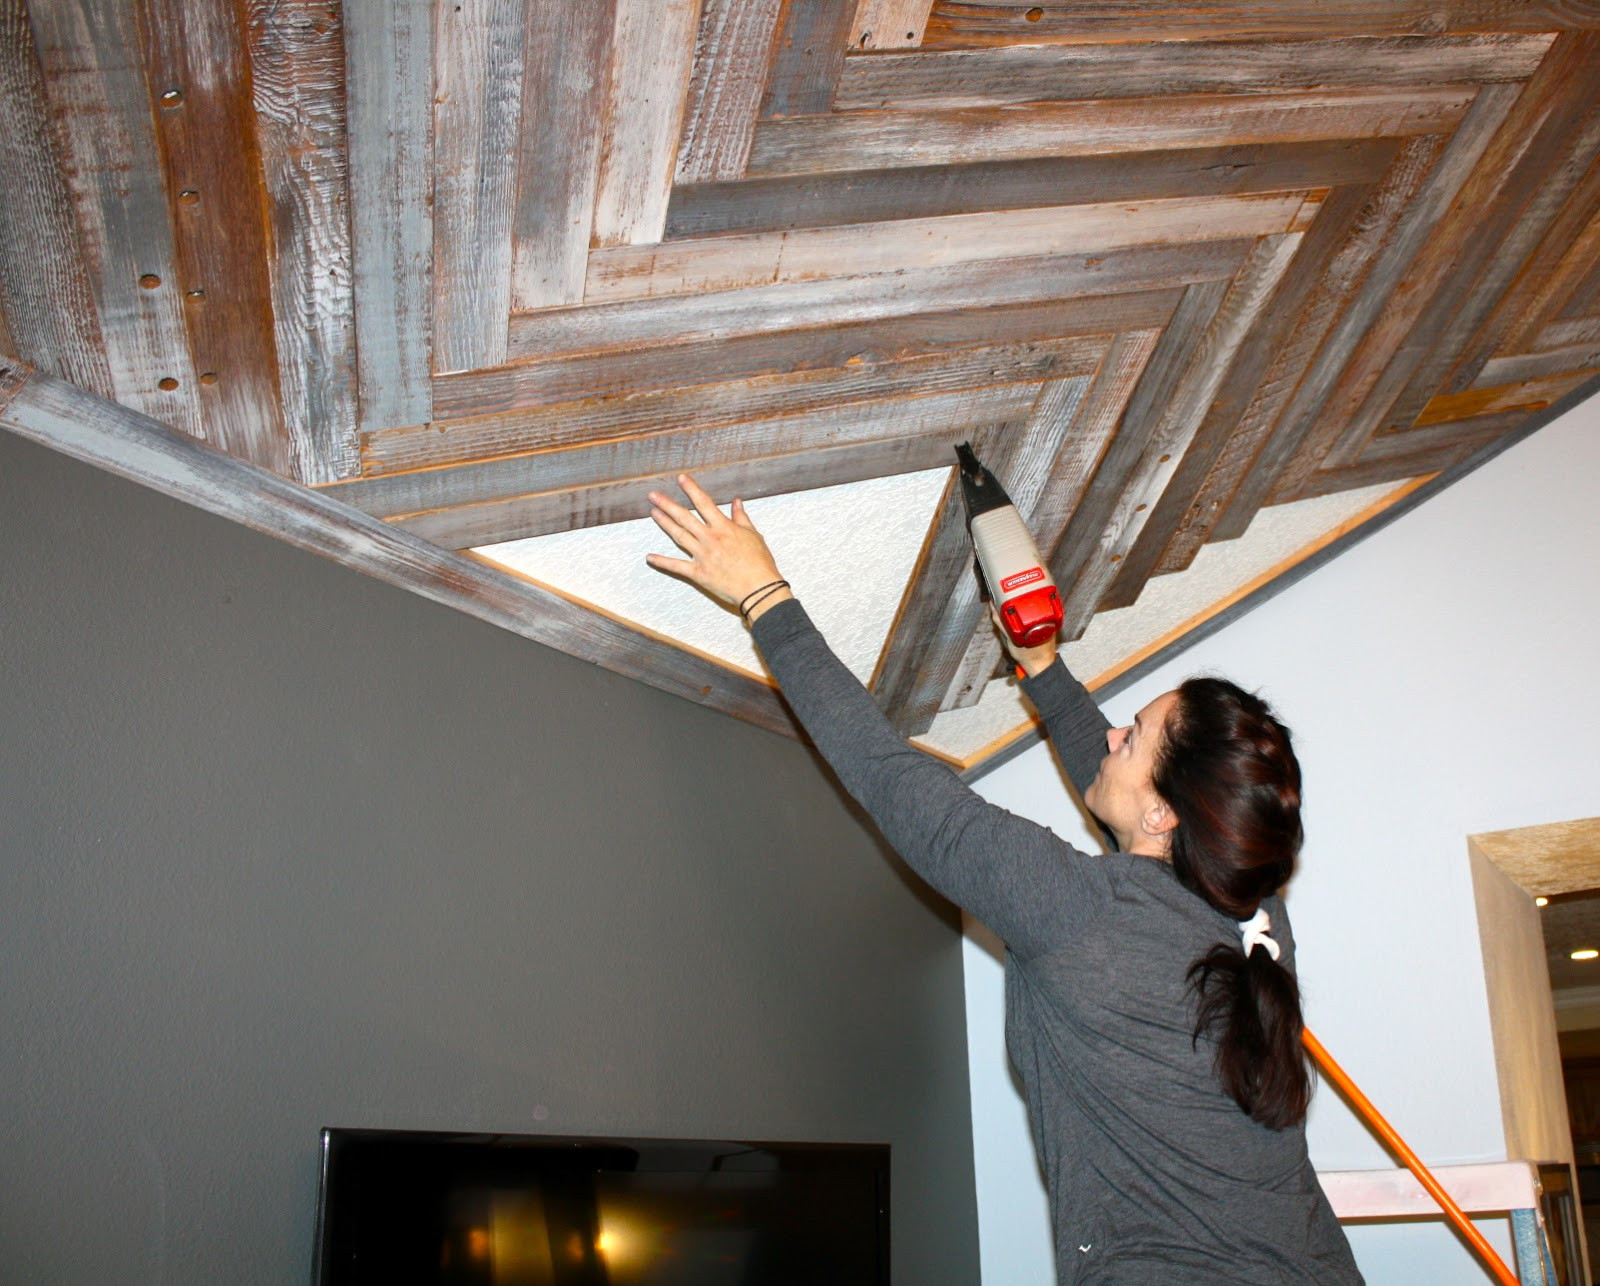 Best ideas about DIY Wood Ceiling
. Save or Pin MakeMePrettyAgain Reclaimed Wood Herringbone Pattern Now.